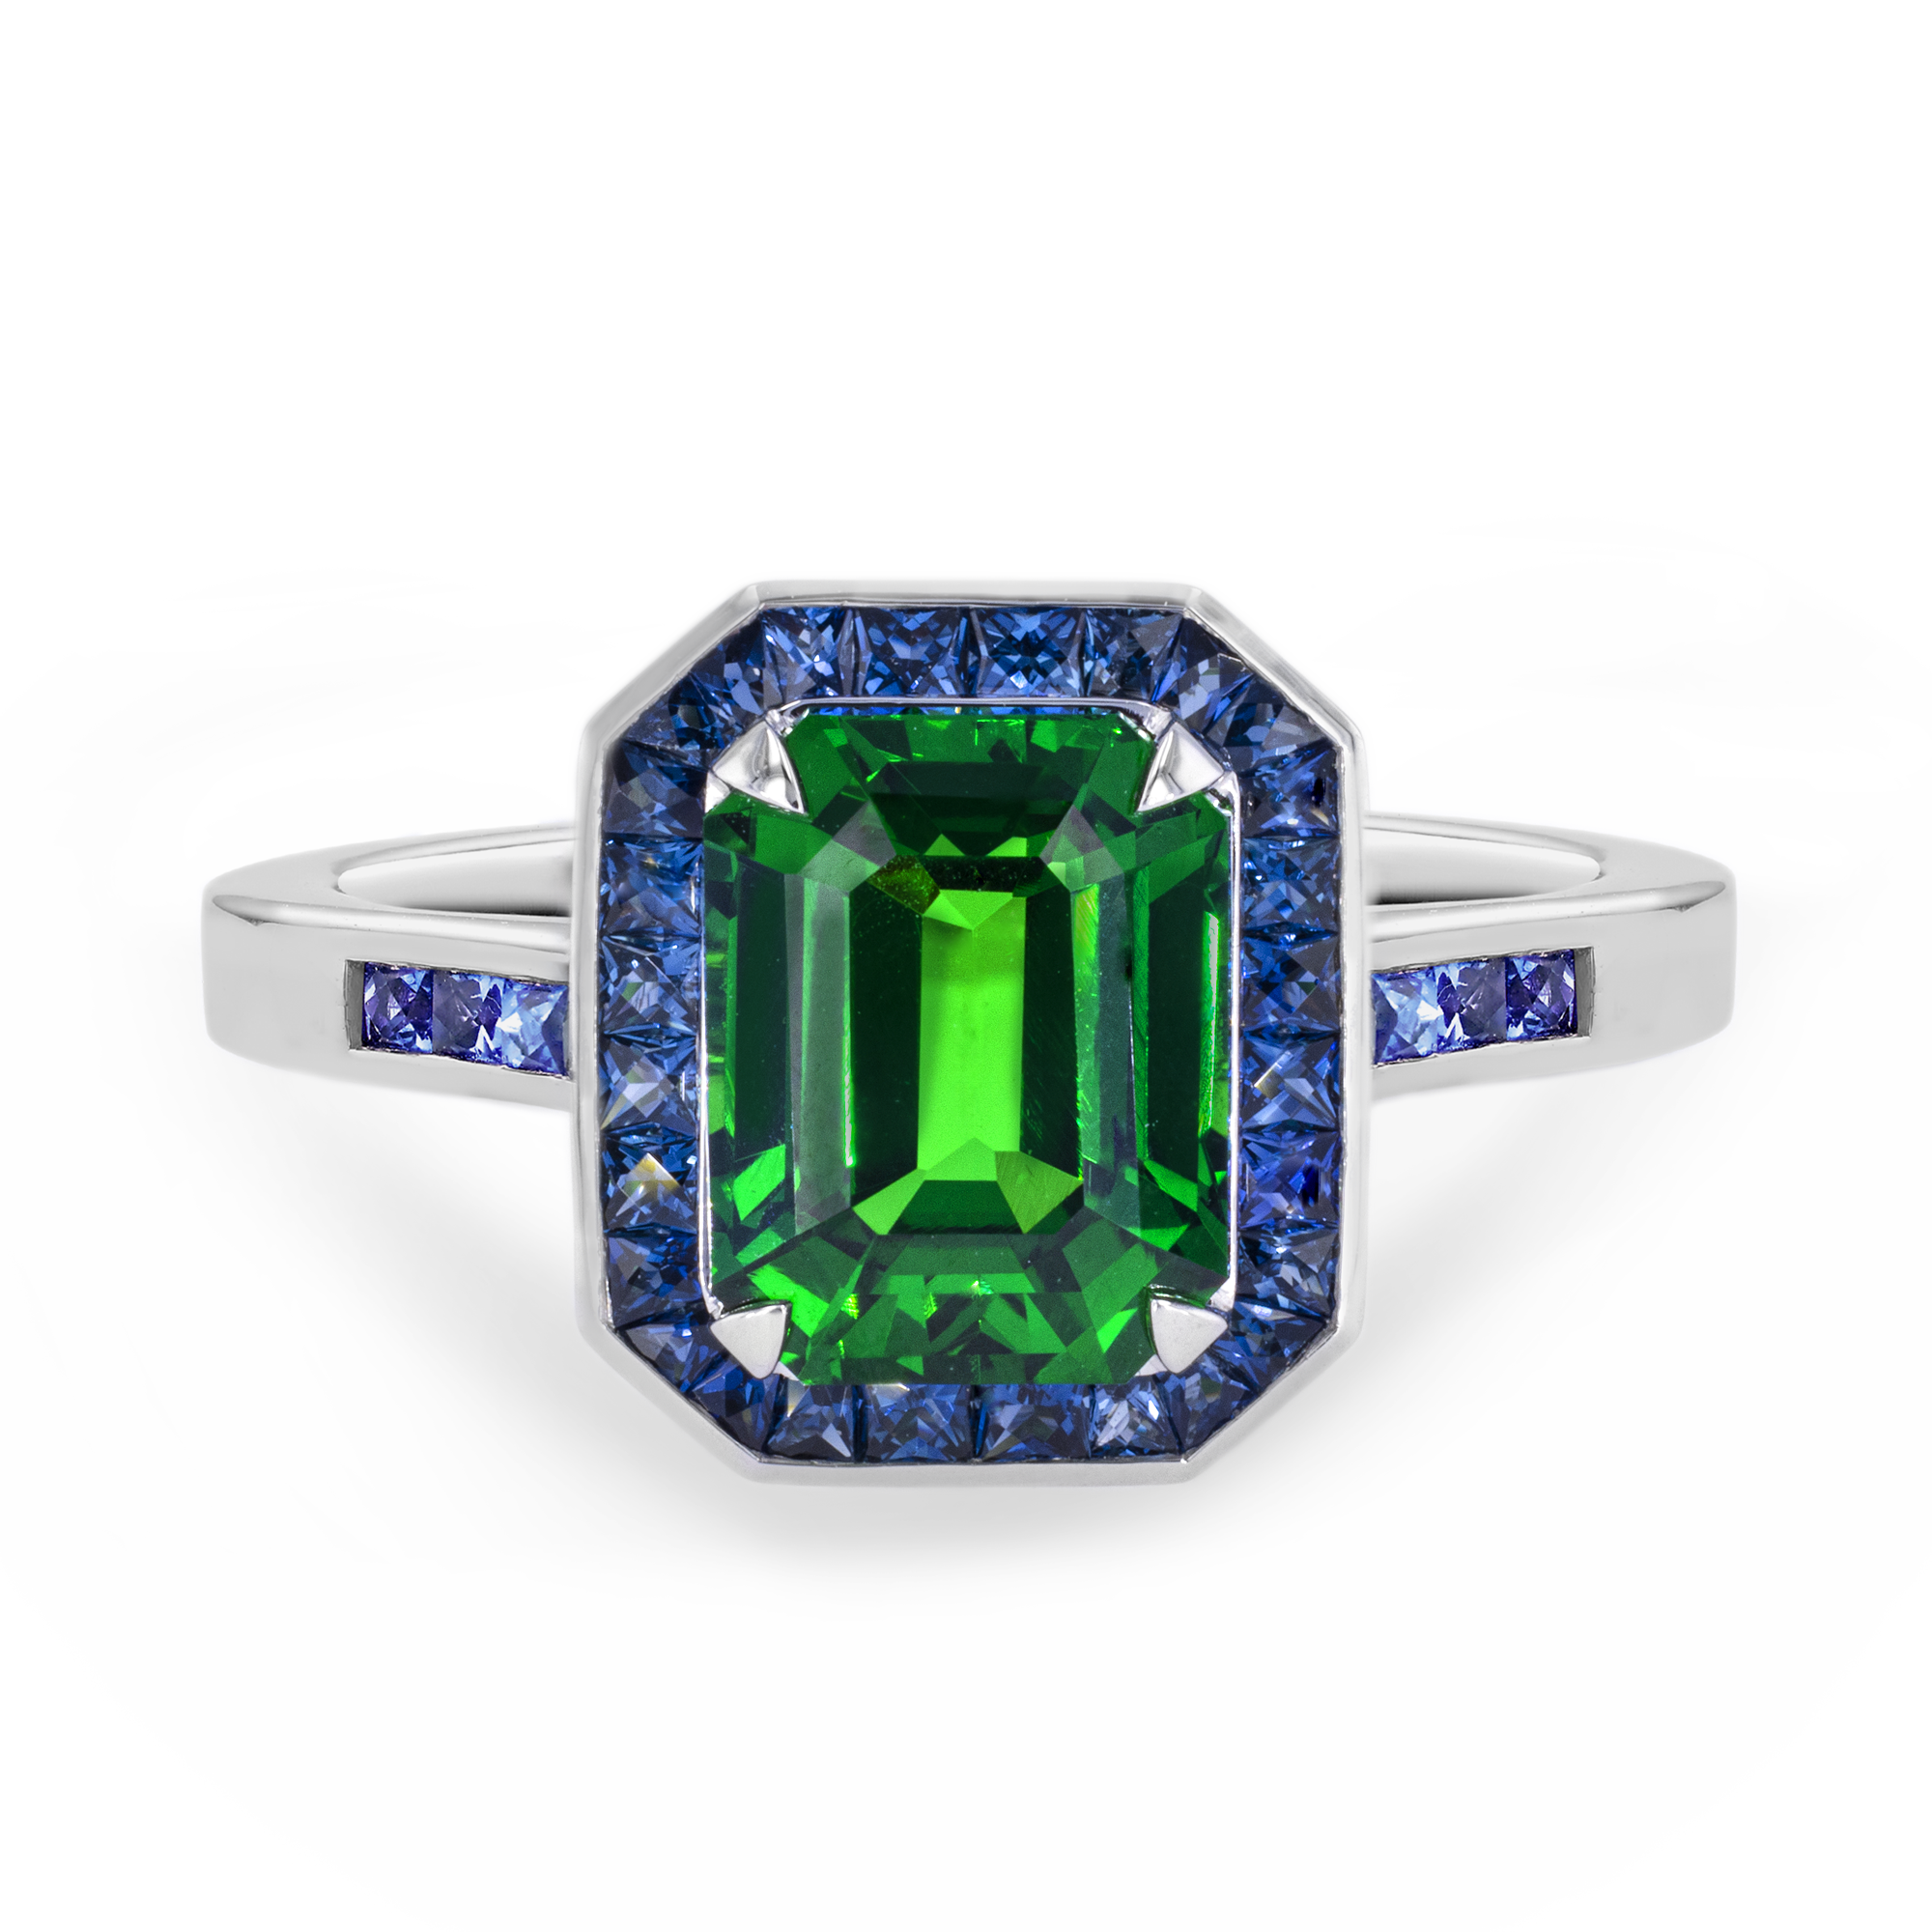 Gatsby 3.07ct Tsavorite Garnet Ring with Blue Sapphire Surround Emerald & French Cut, Claw & Channel Set_2